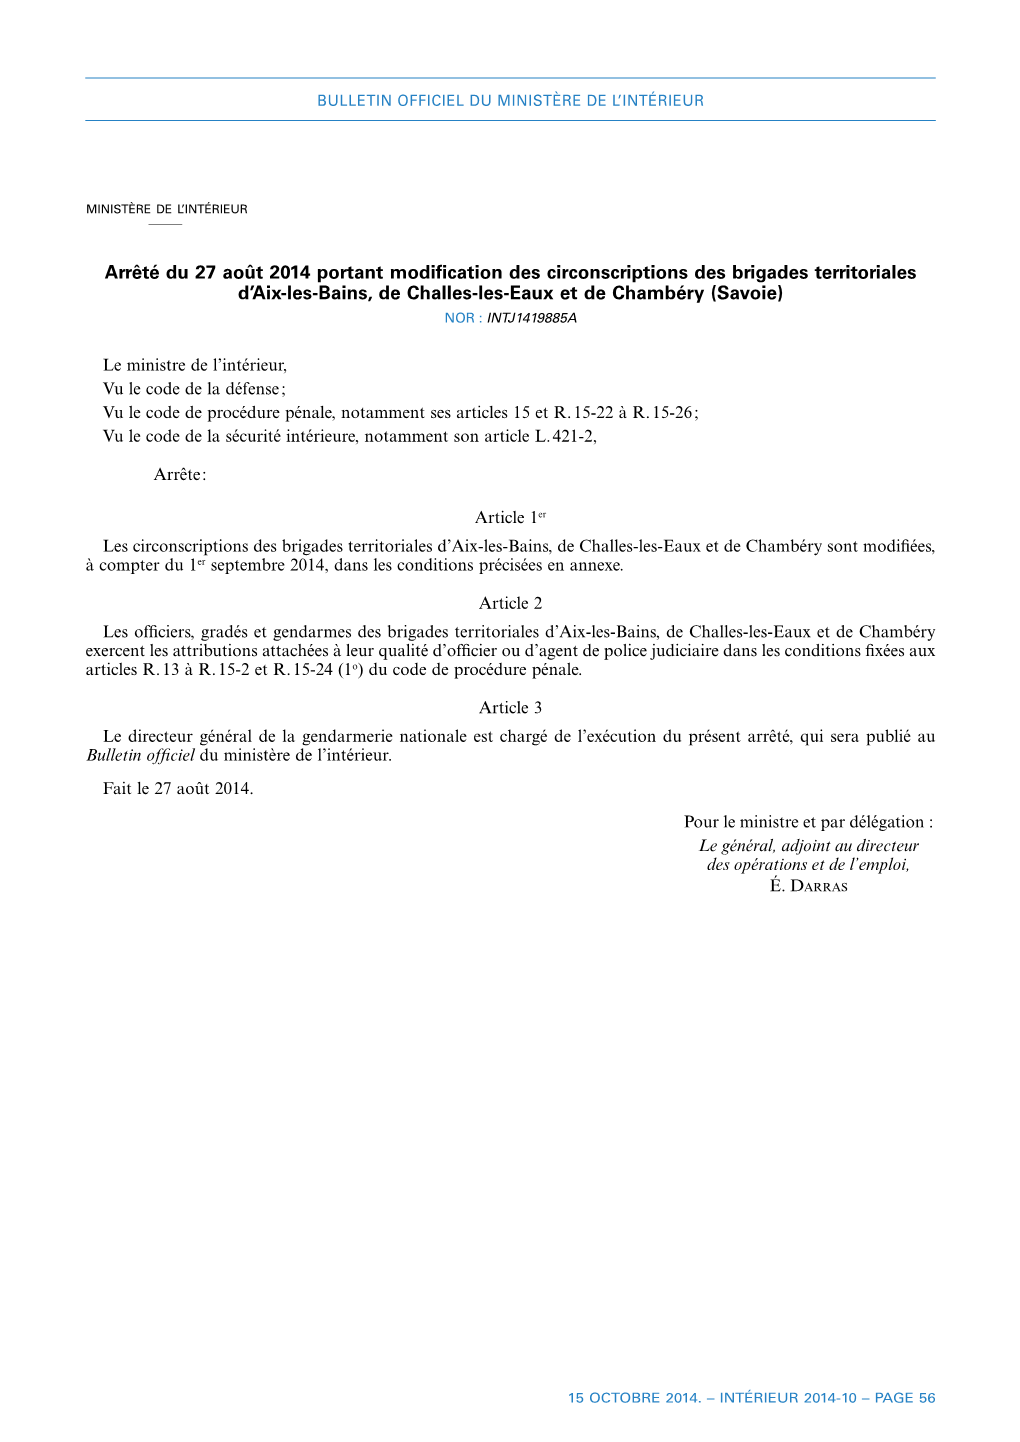 Arrêté Du 27 Août 2014 Portant Modification Des Circonscriptions Des Brigades Territoriales D'aix-Les-Bains, De Challes-L